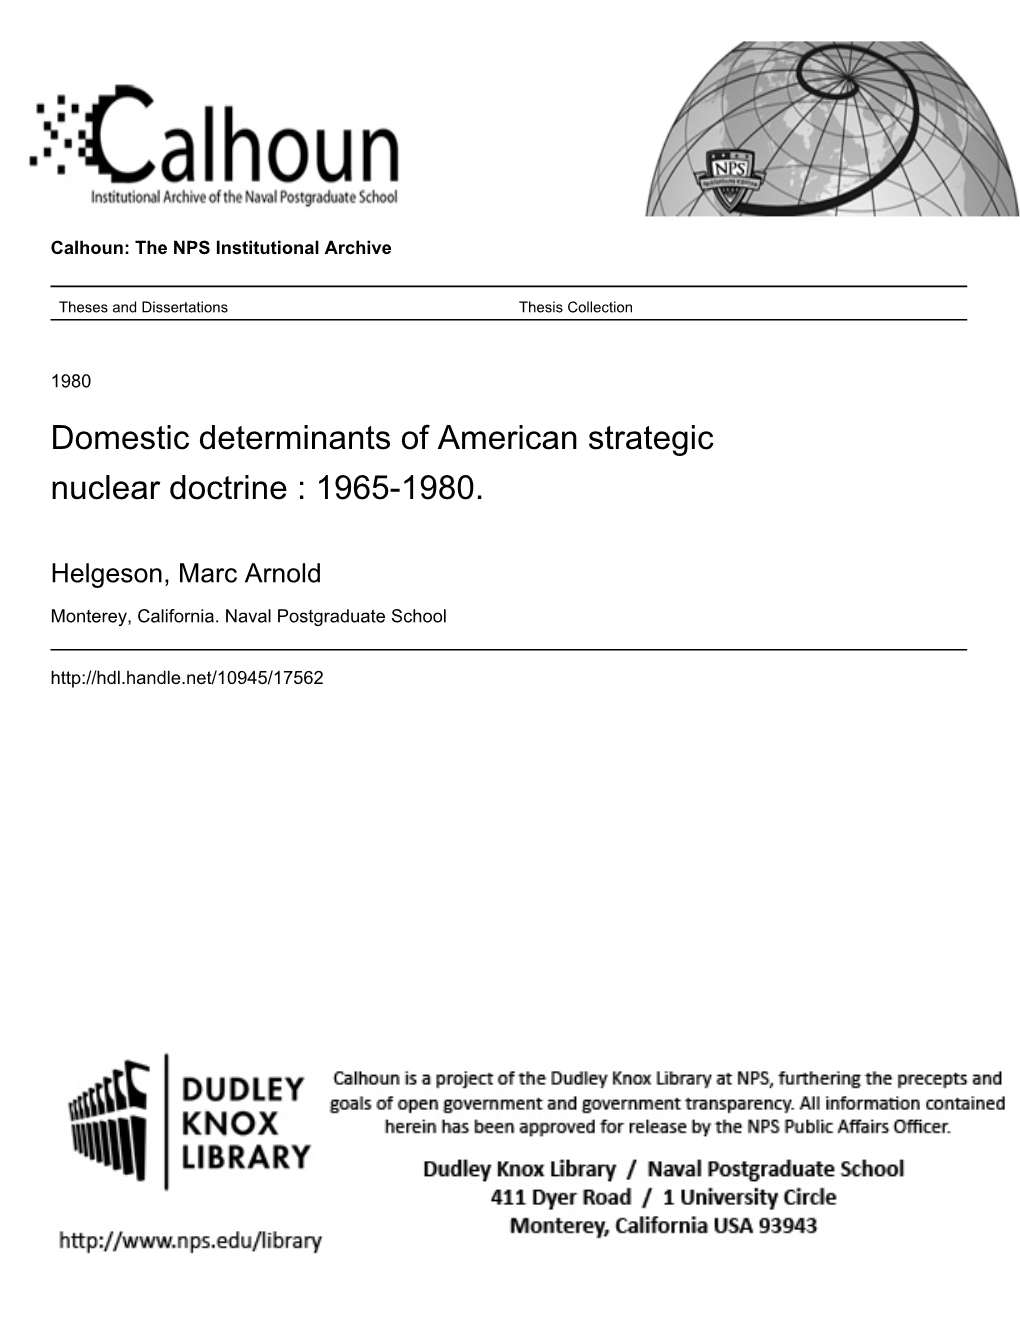 Domestic Determinants of American Strategic Nuclear Doctrine : 1965-1980